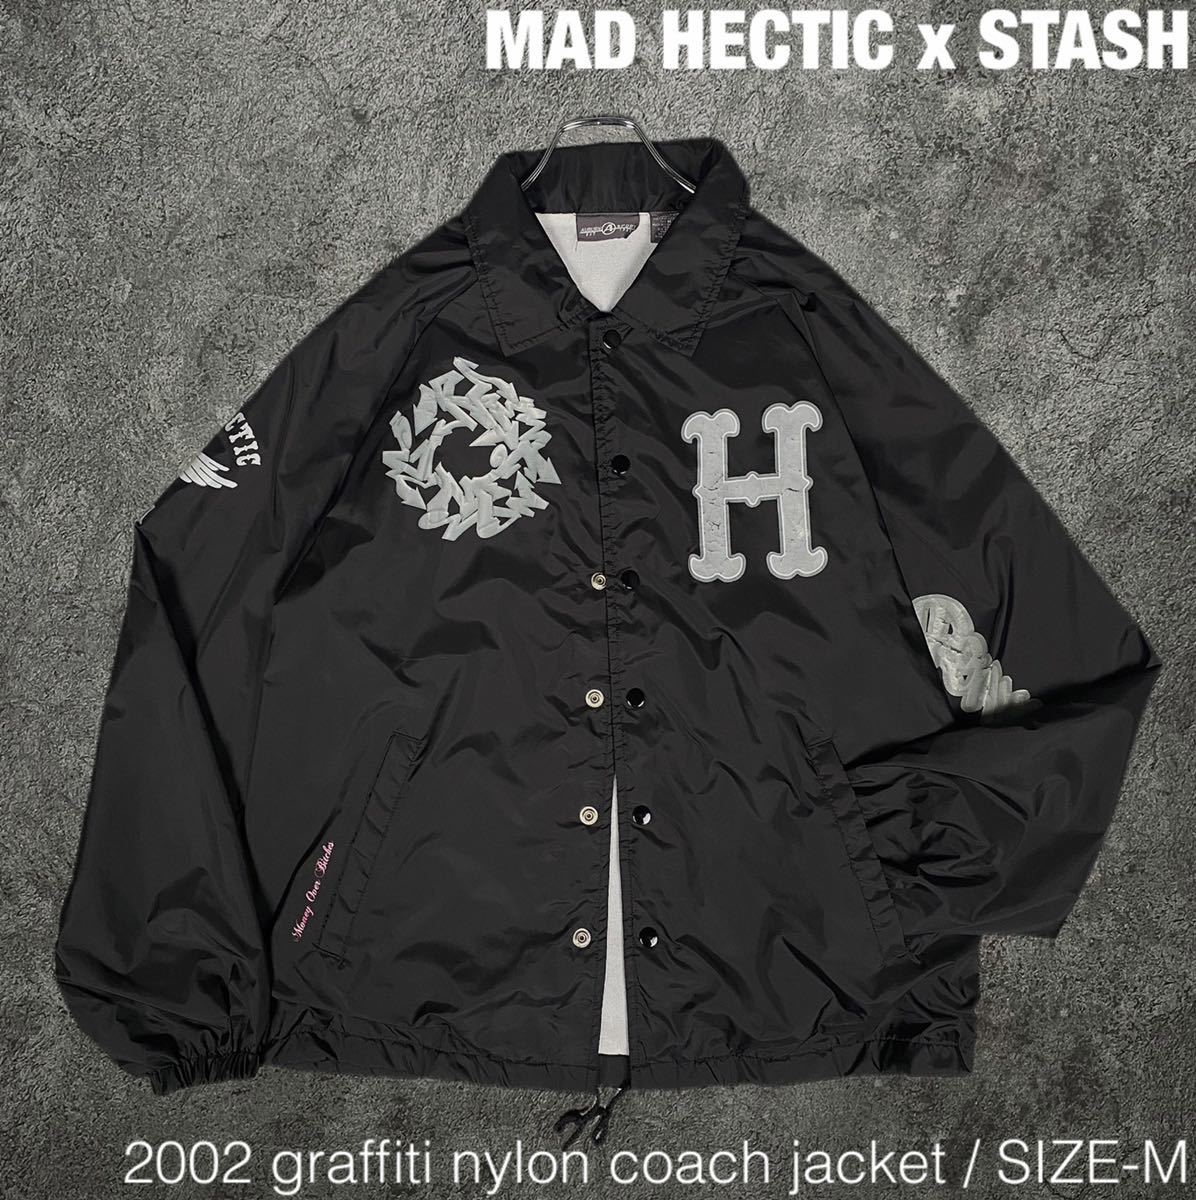 MAD HECTIC x STASH 2007 グラフィティ ナイロン コーチジャケット 90s 00s Y2K ヘクティク スタッシュ アーカイブ jacket